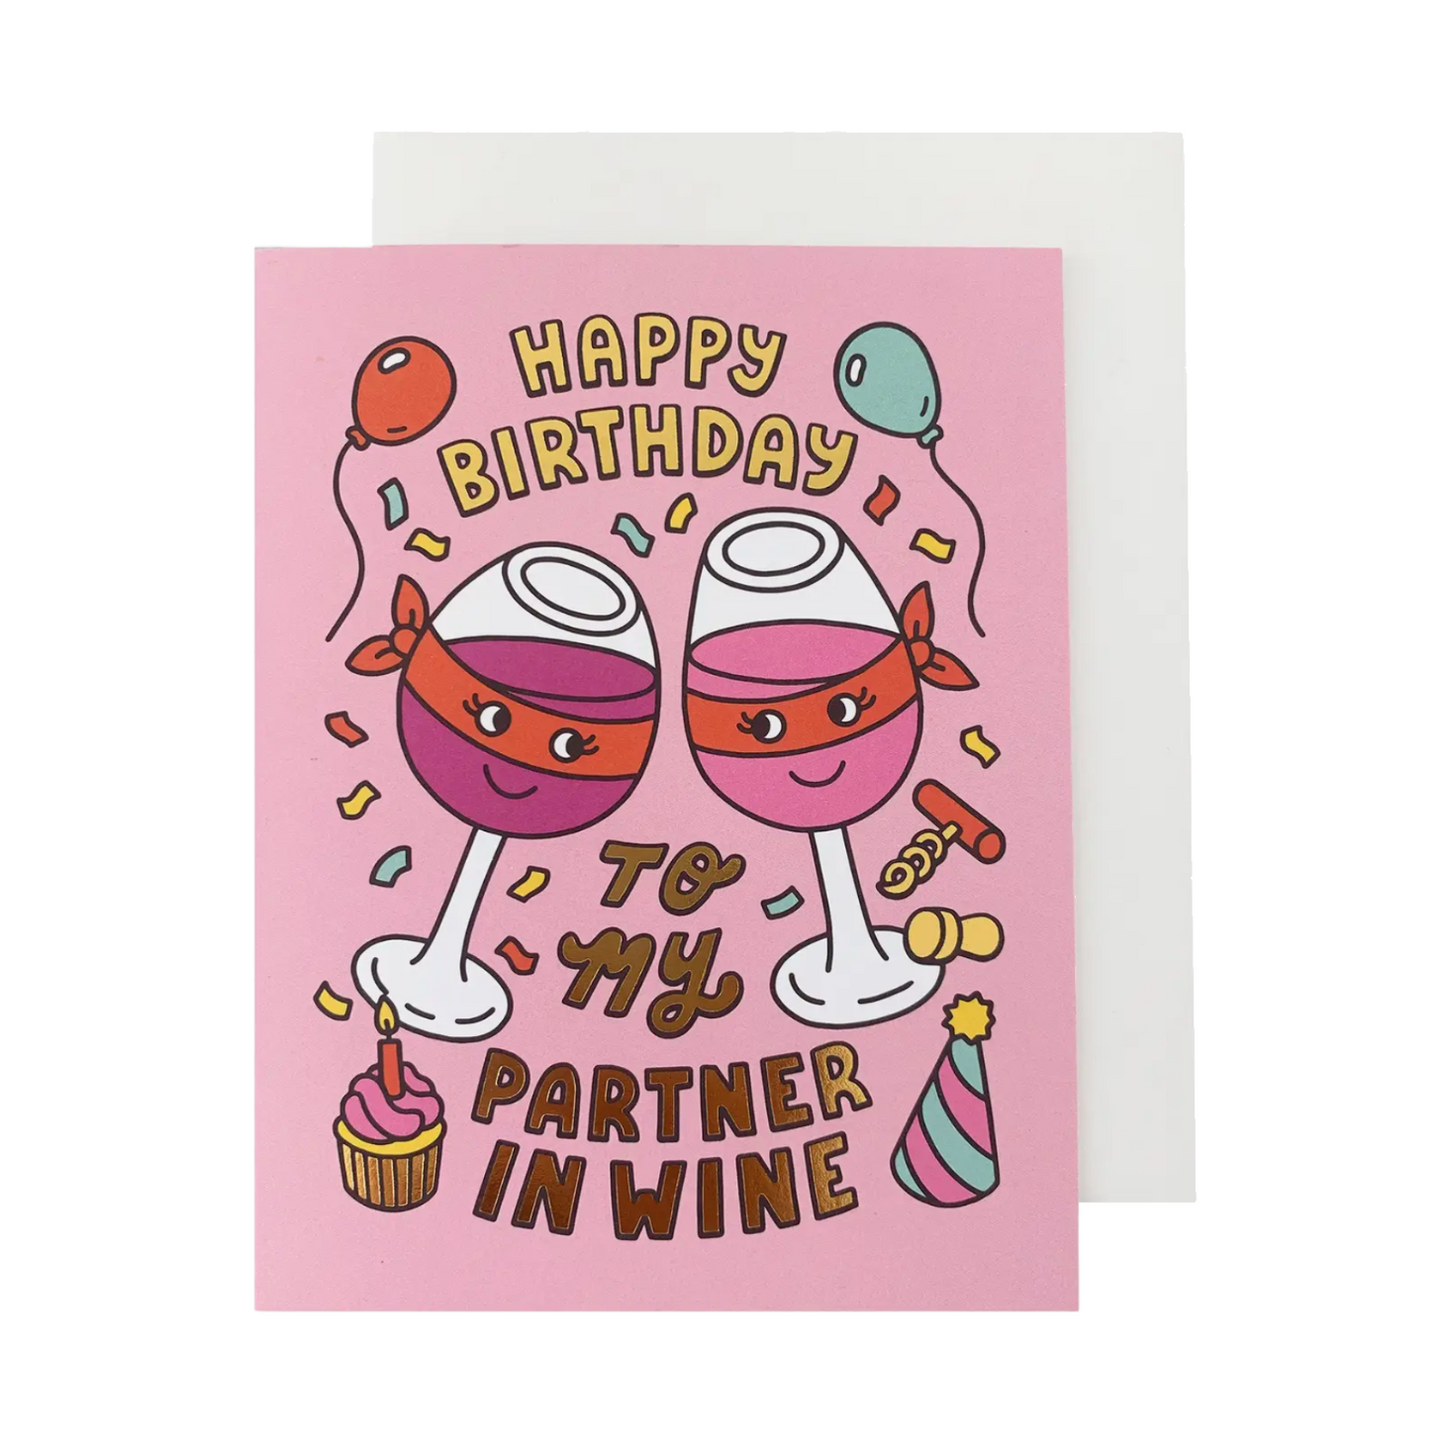 Partner In Wine - Happy Birthday Card